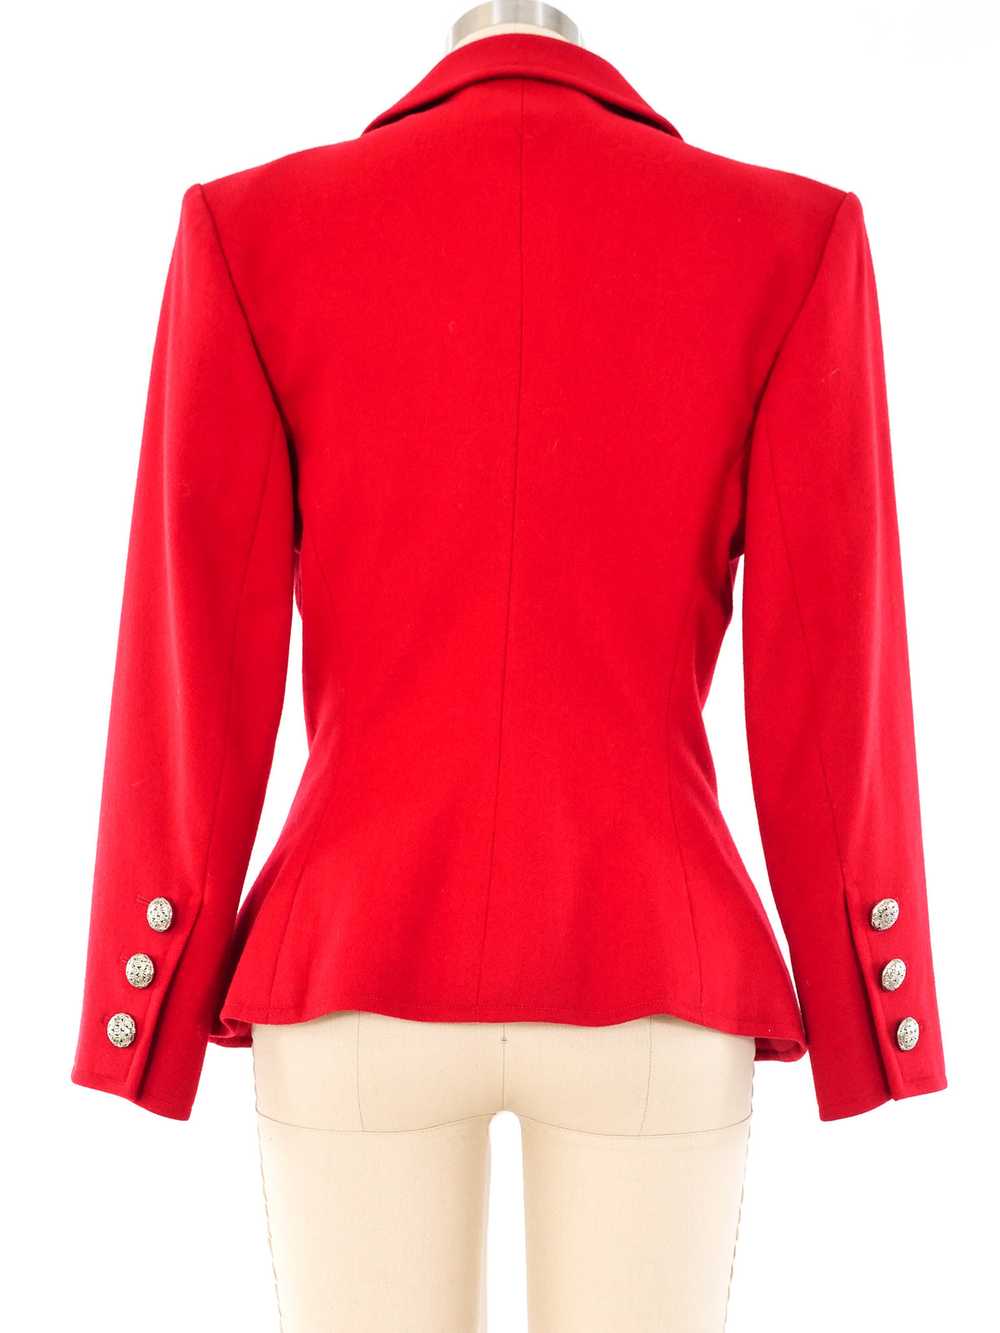 Yves Saint Laurent Red Wool Jacket - image 3